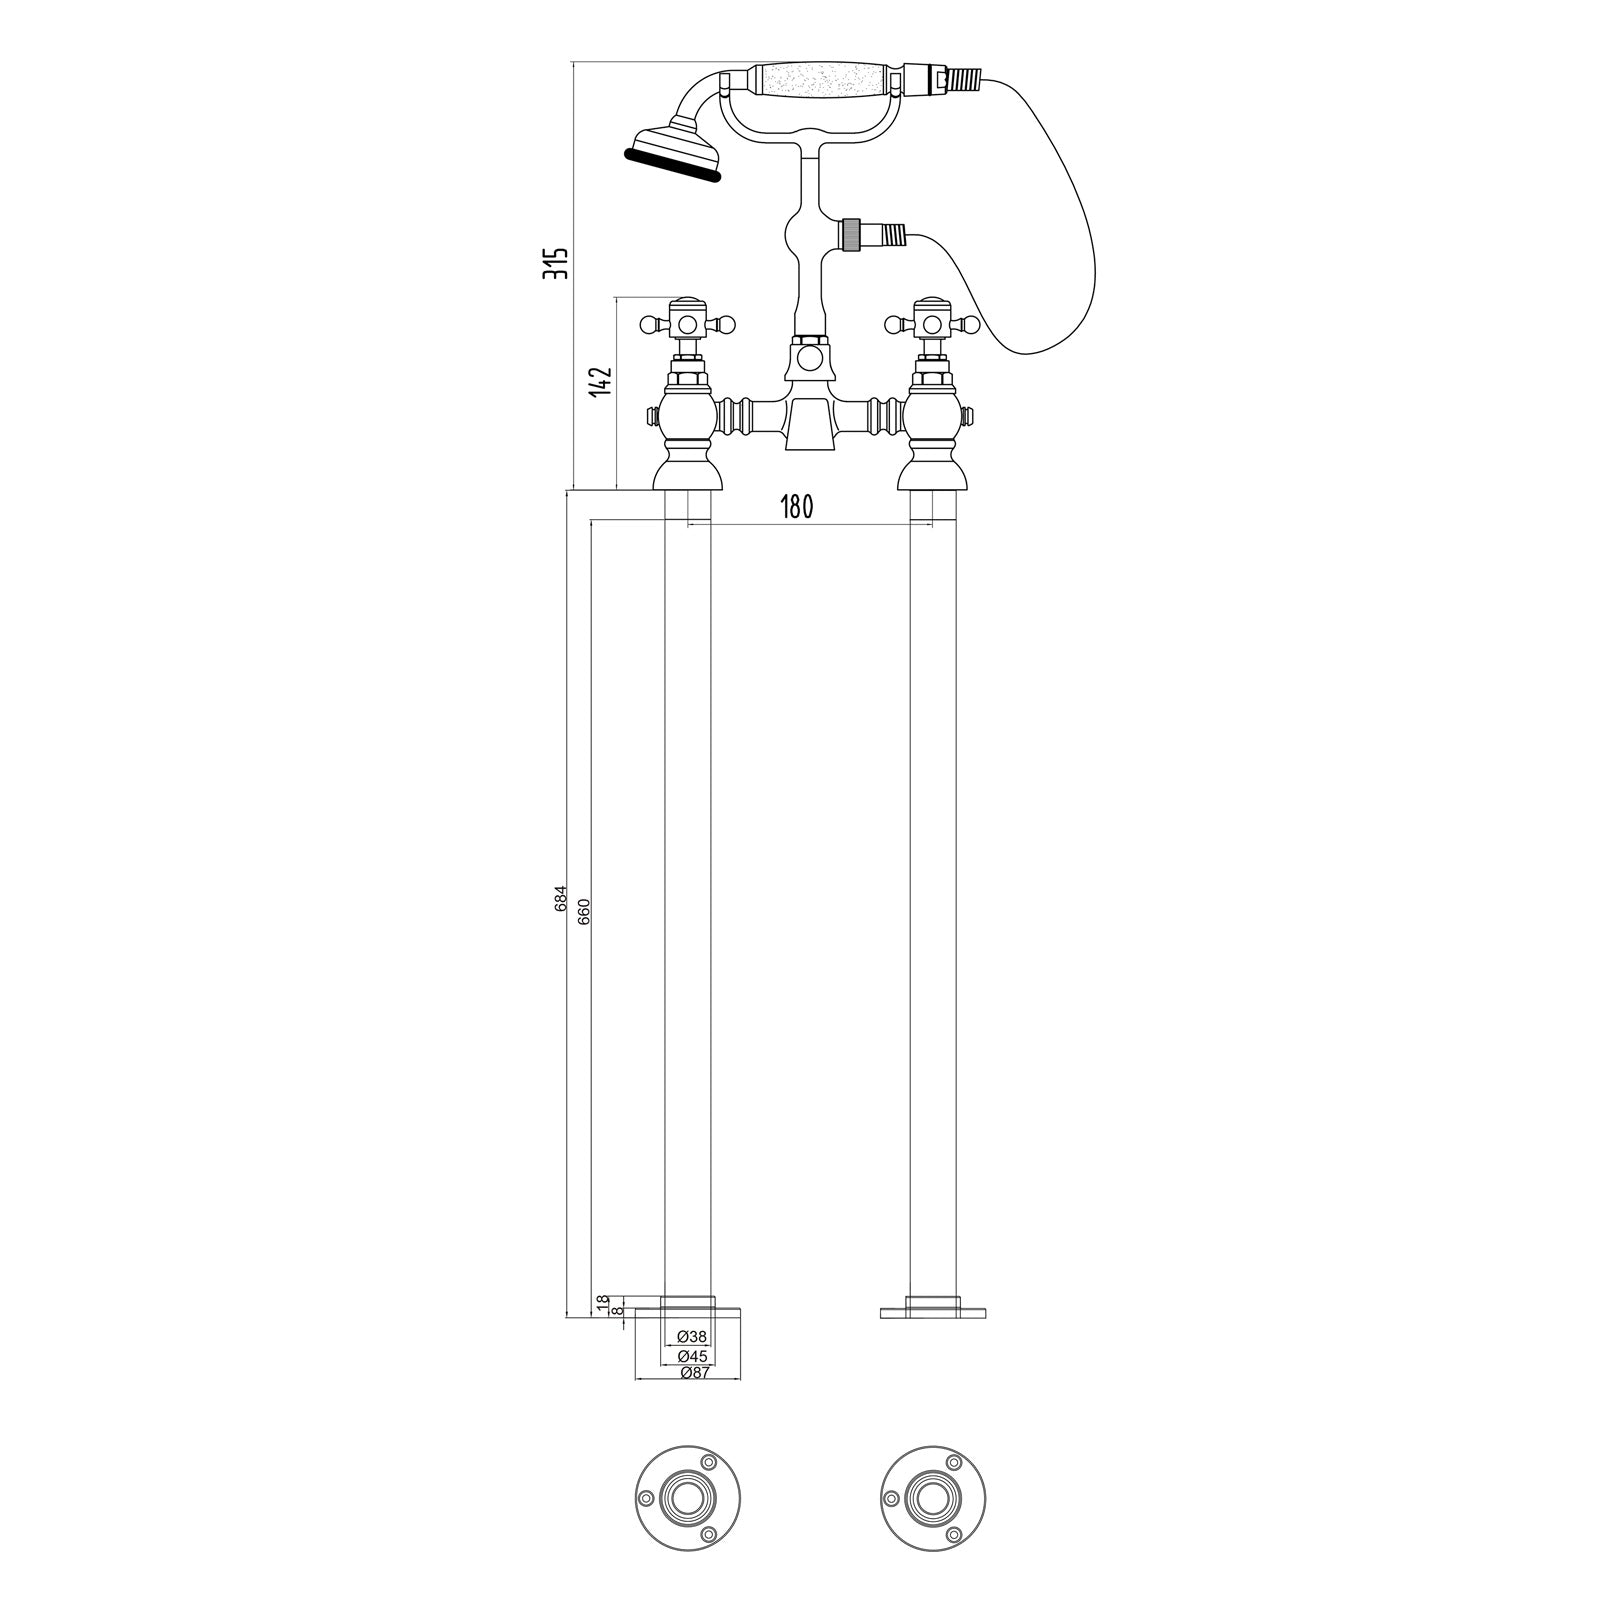 Churchill Traditional Freestanding Cross Head Bath Shower Mixer Tap With Handheld Kit